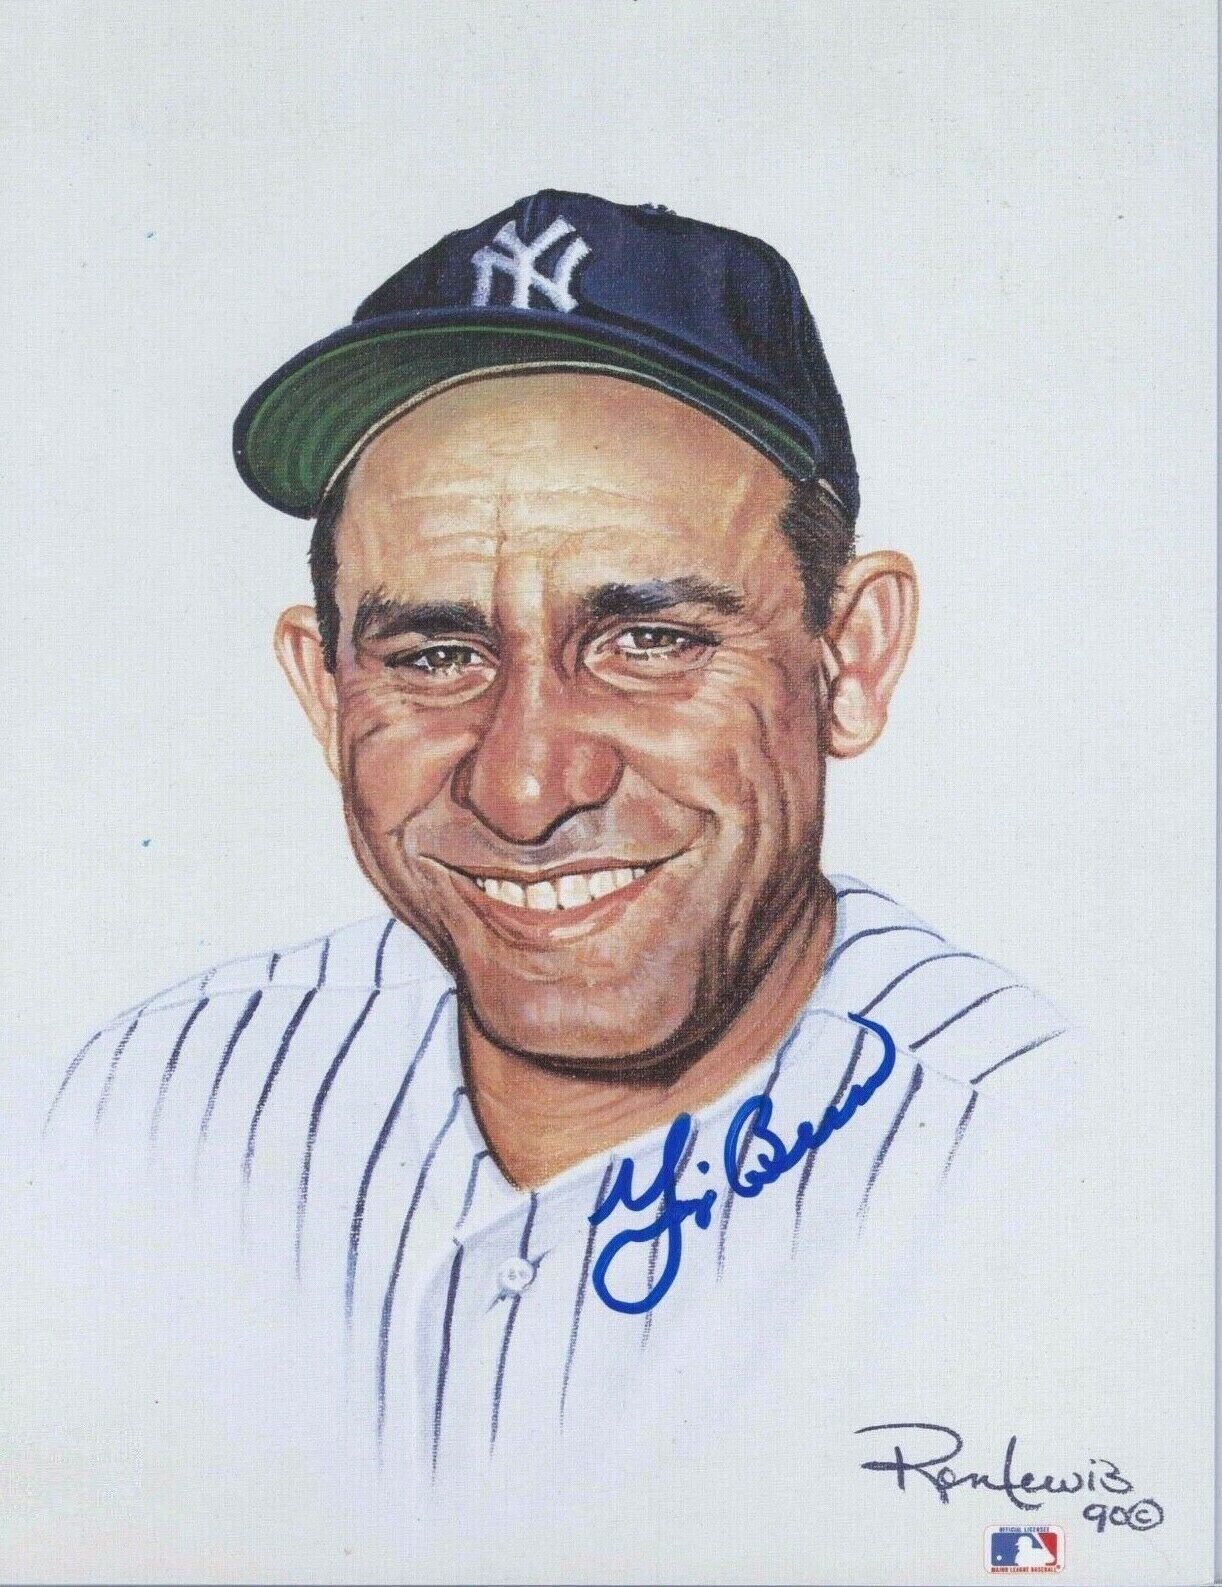 Yogi Berra Autographed Signed 8x10 Photo Poster painting ( HOF Yankees ) REPRINT